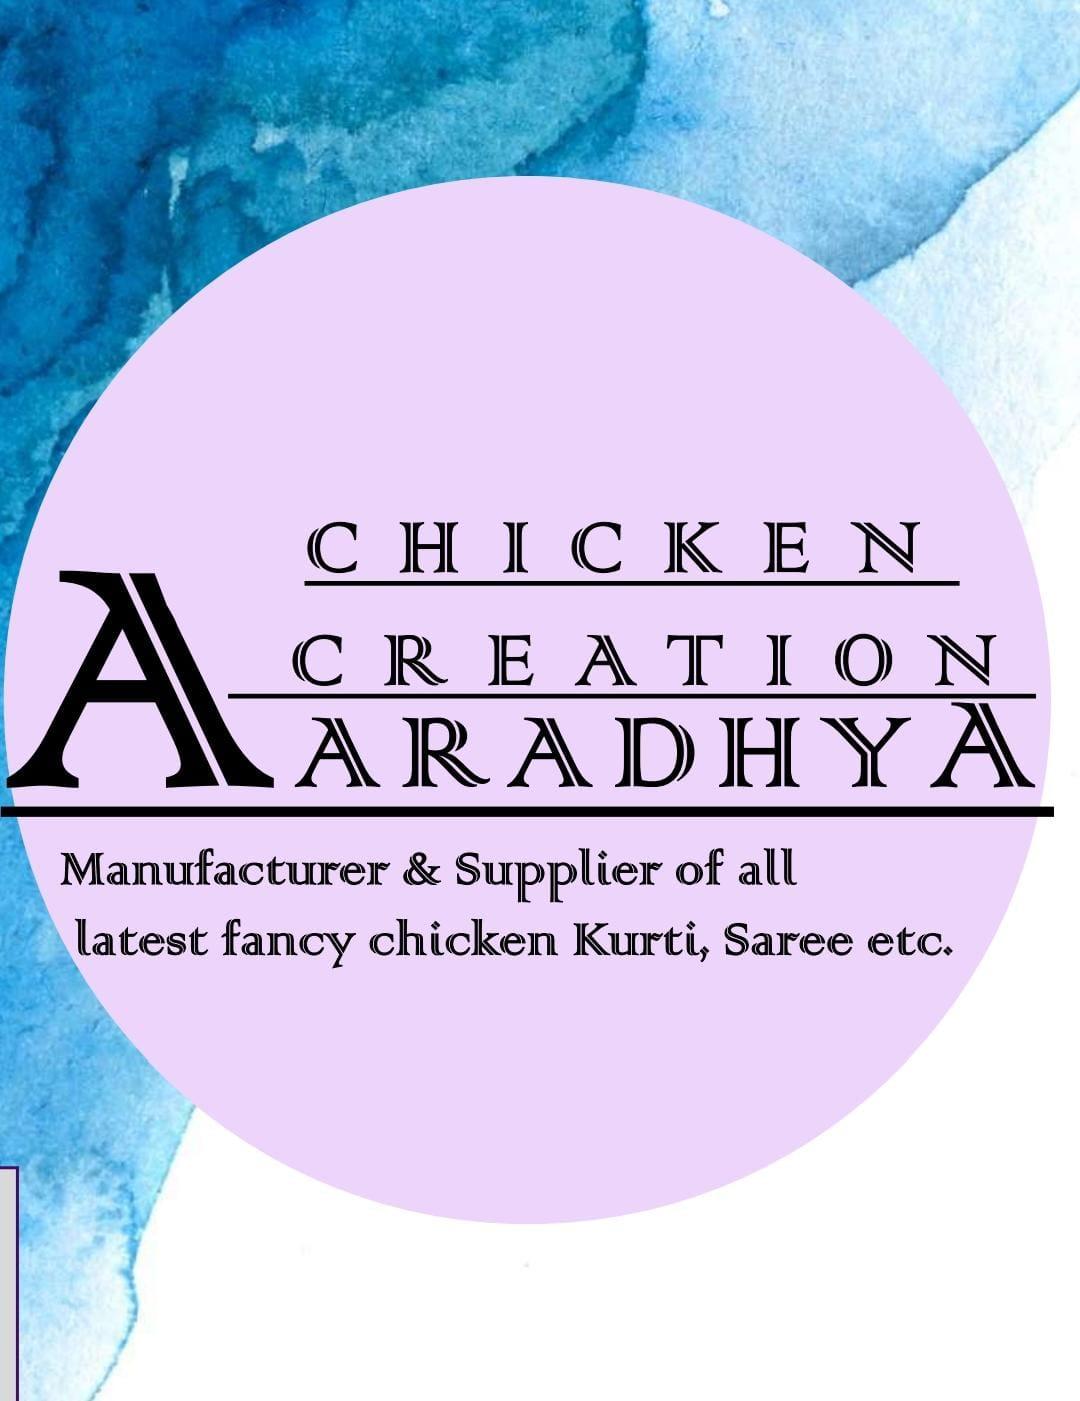 AARADHYA CHICKEN CREATION